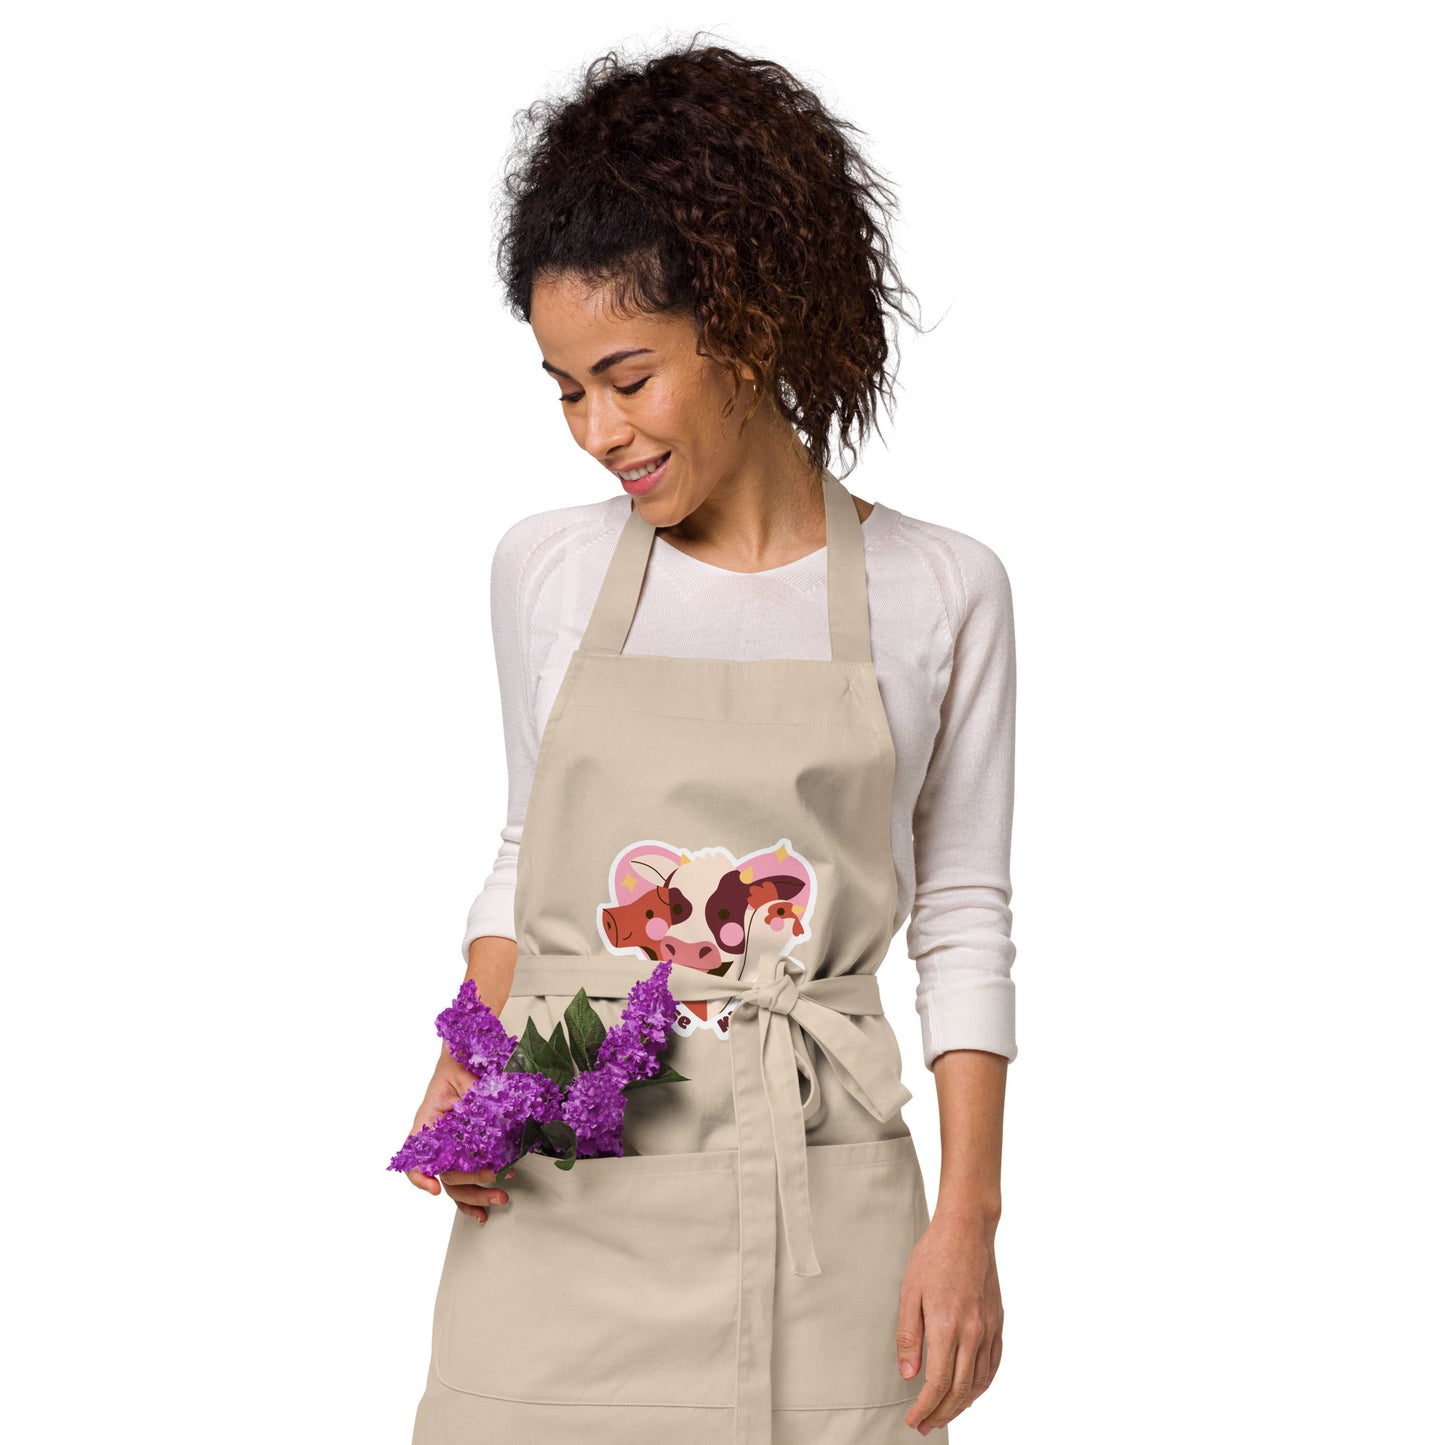 Choose Kindness - Organic cotton apron